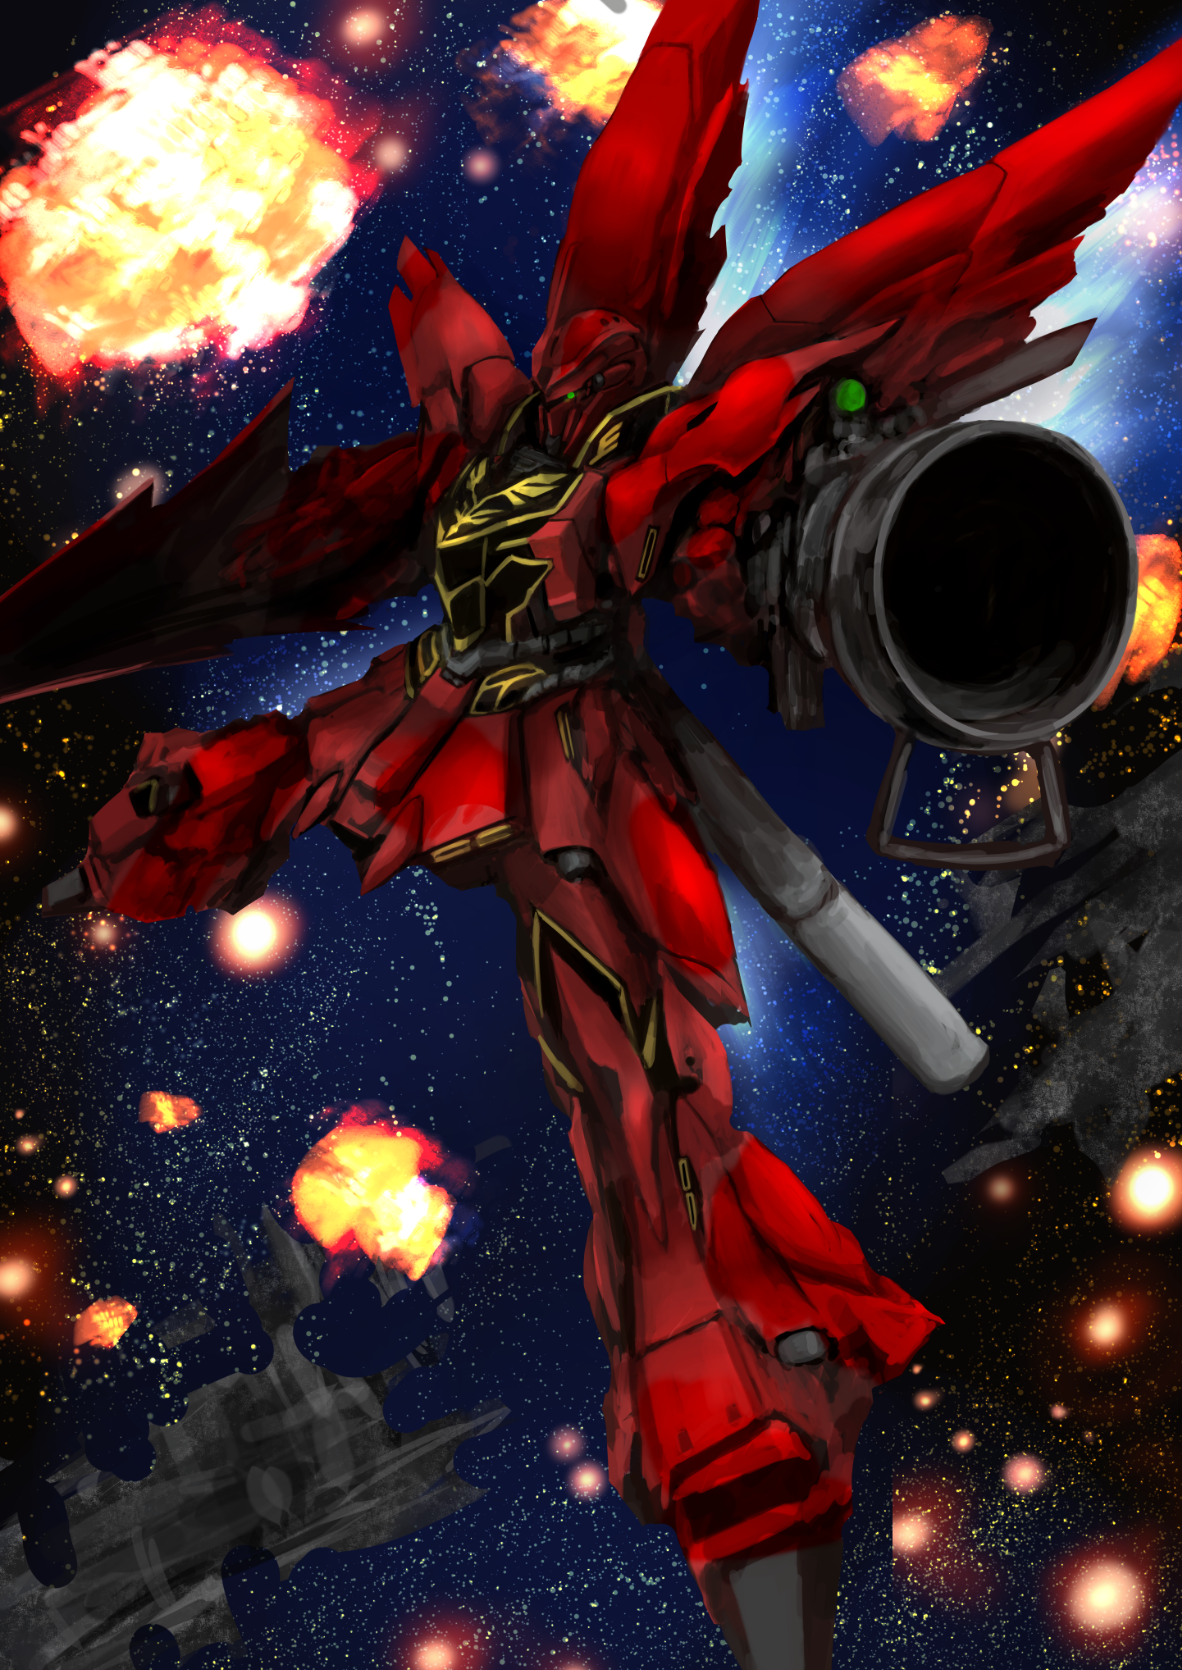 Anime 1182x1670 anime mechs Super Robot Taisen Mobile Suit Gundam Unicorn Sinanju Mobile Suit artwork digital art fan art